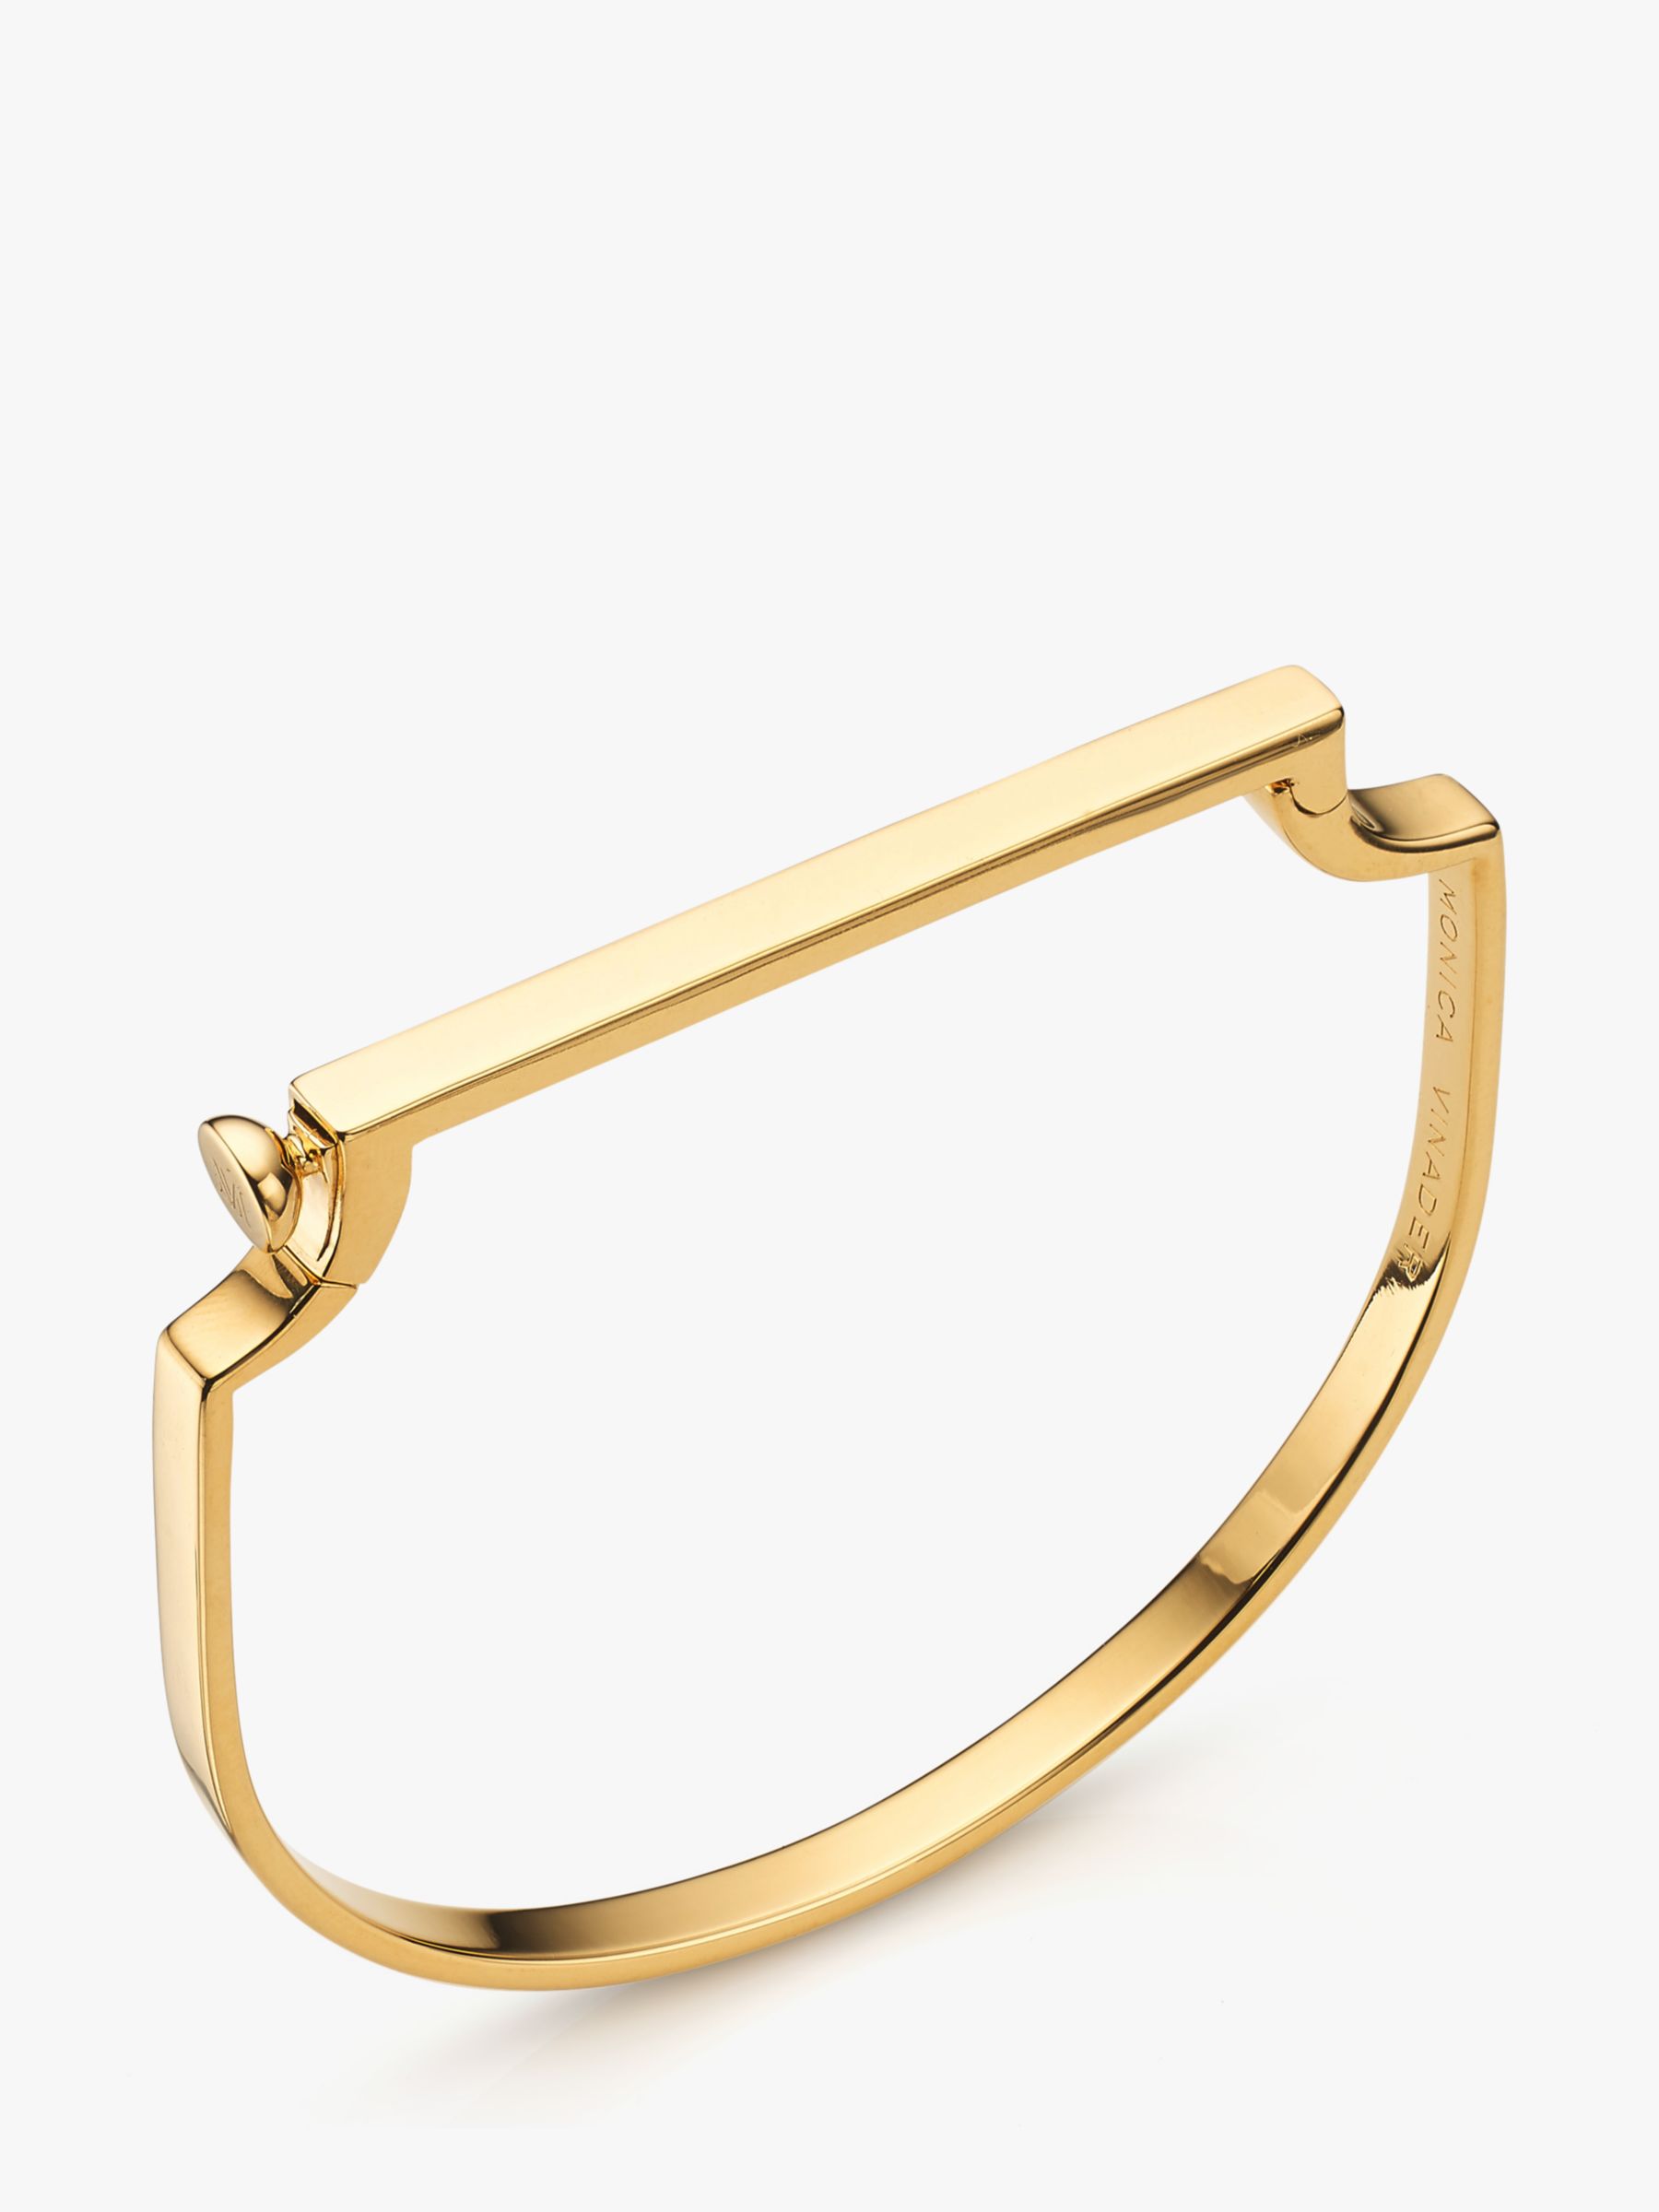 Hermes Diamond Signature Iconic Bag Charms Rose Gold Link Bracelet